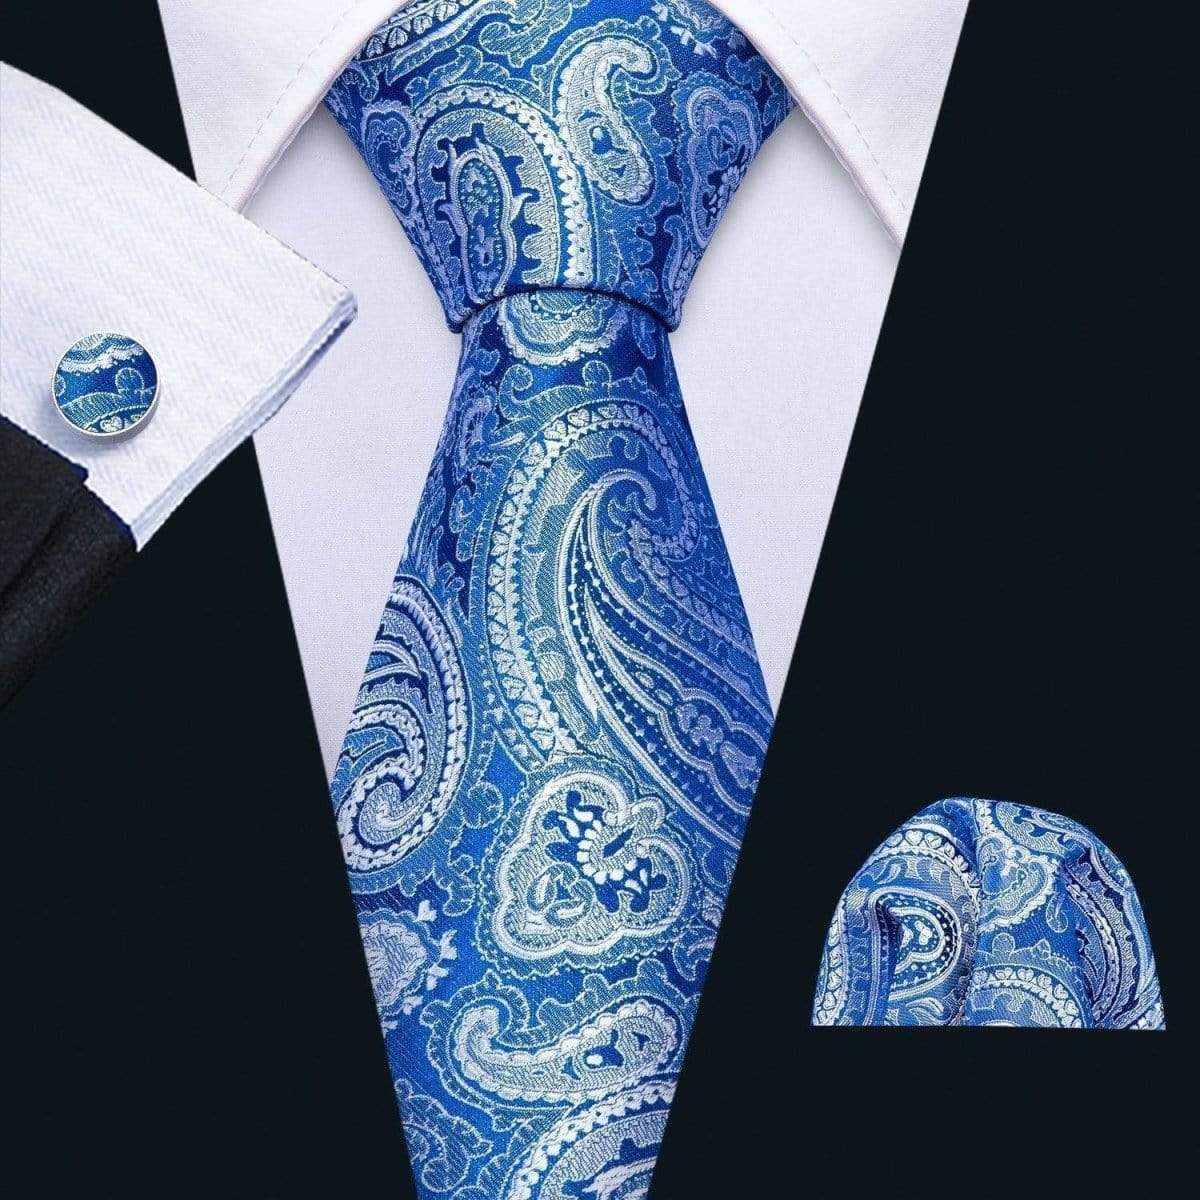 light teal tie